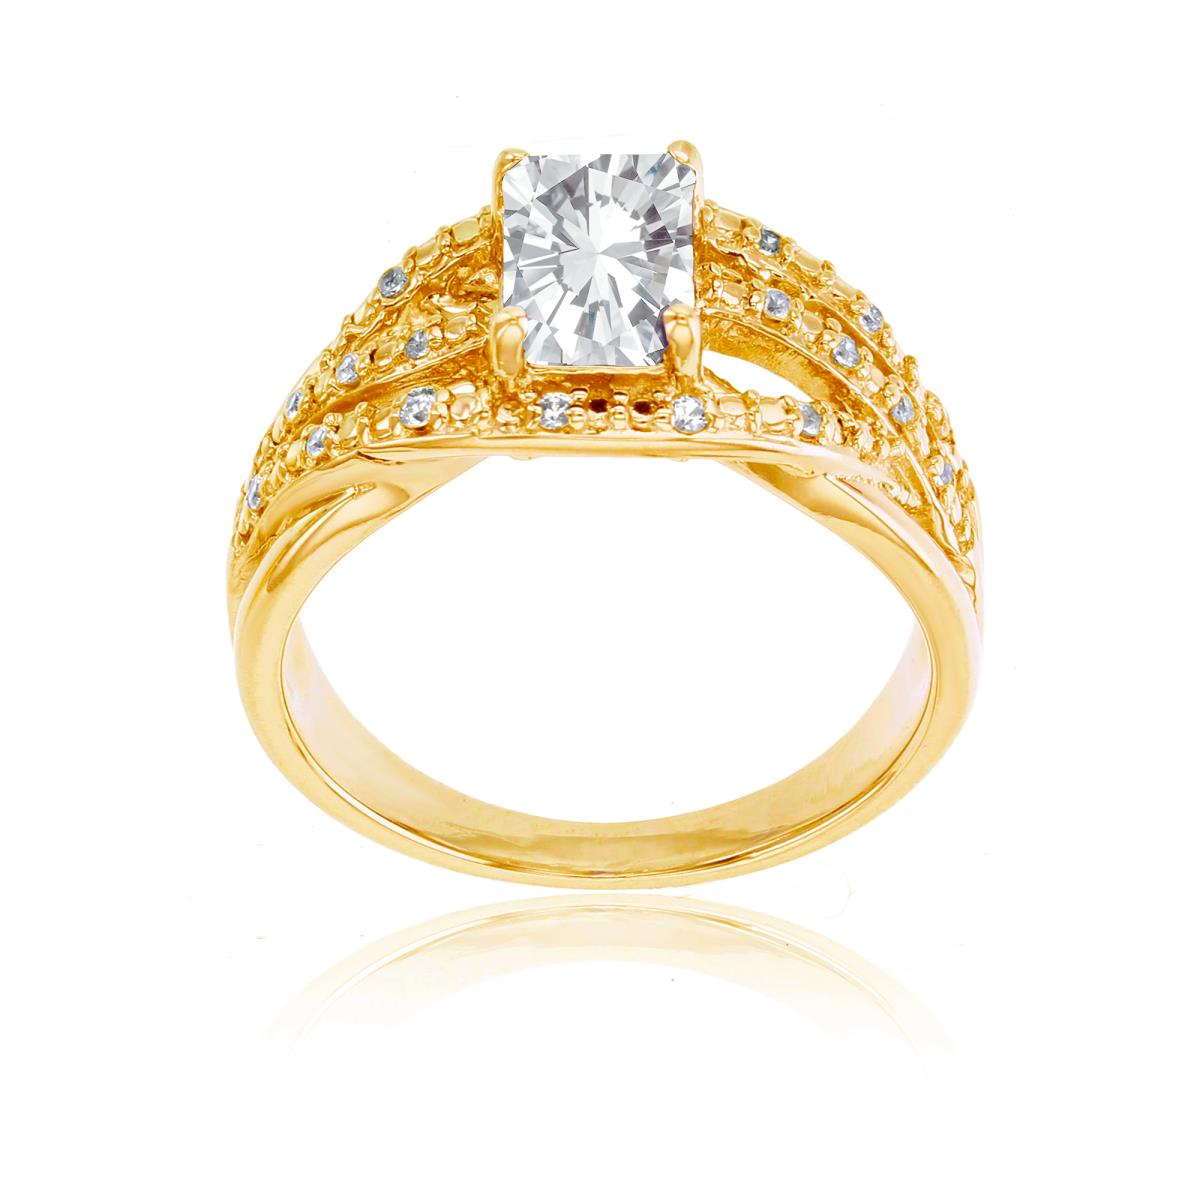 14K Yellow Gold 0.10 CTTW Rnd Diamond & 7x5mm Oct White Topaz Ring